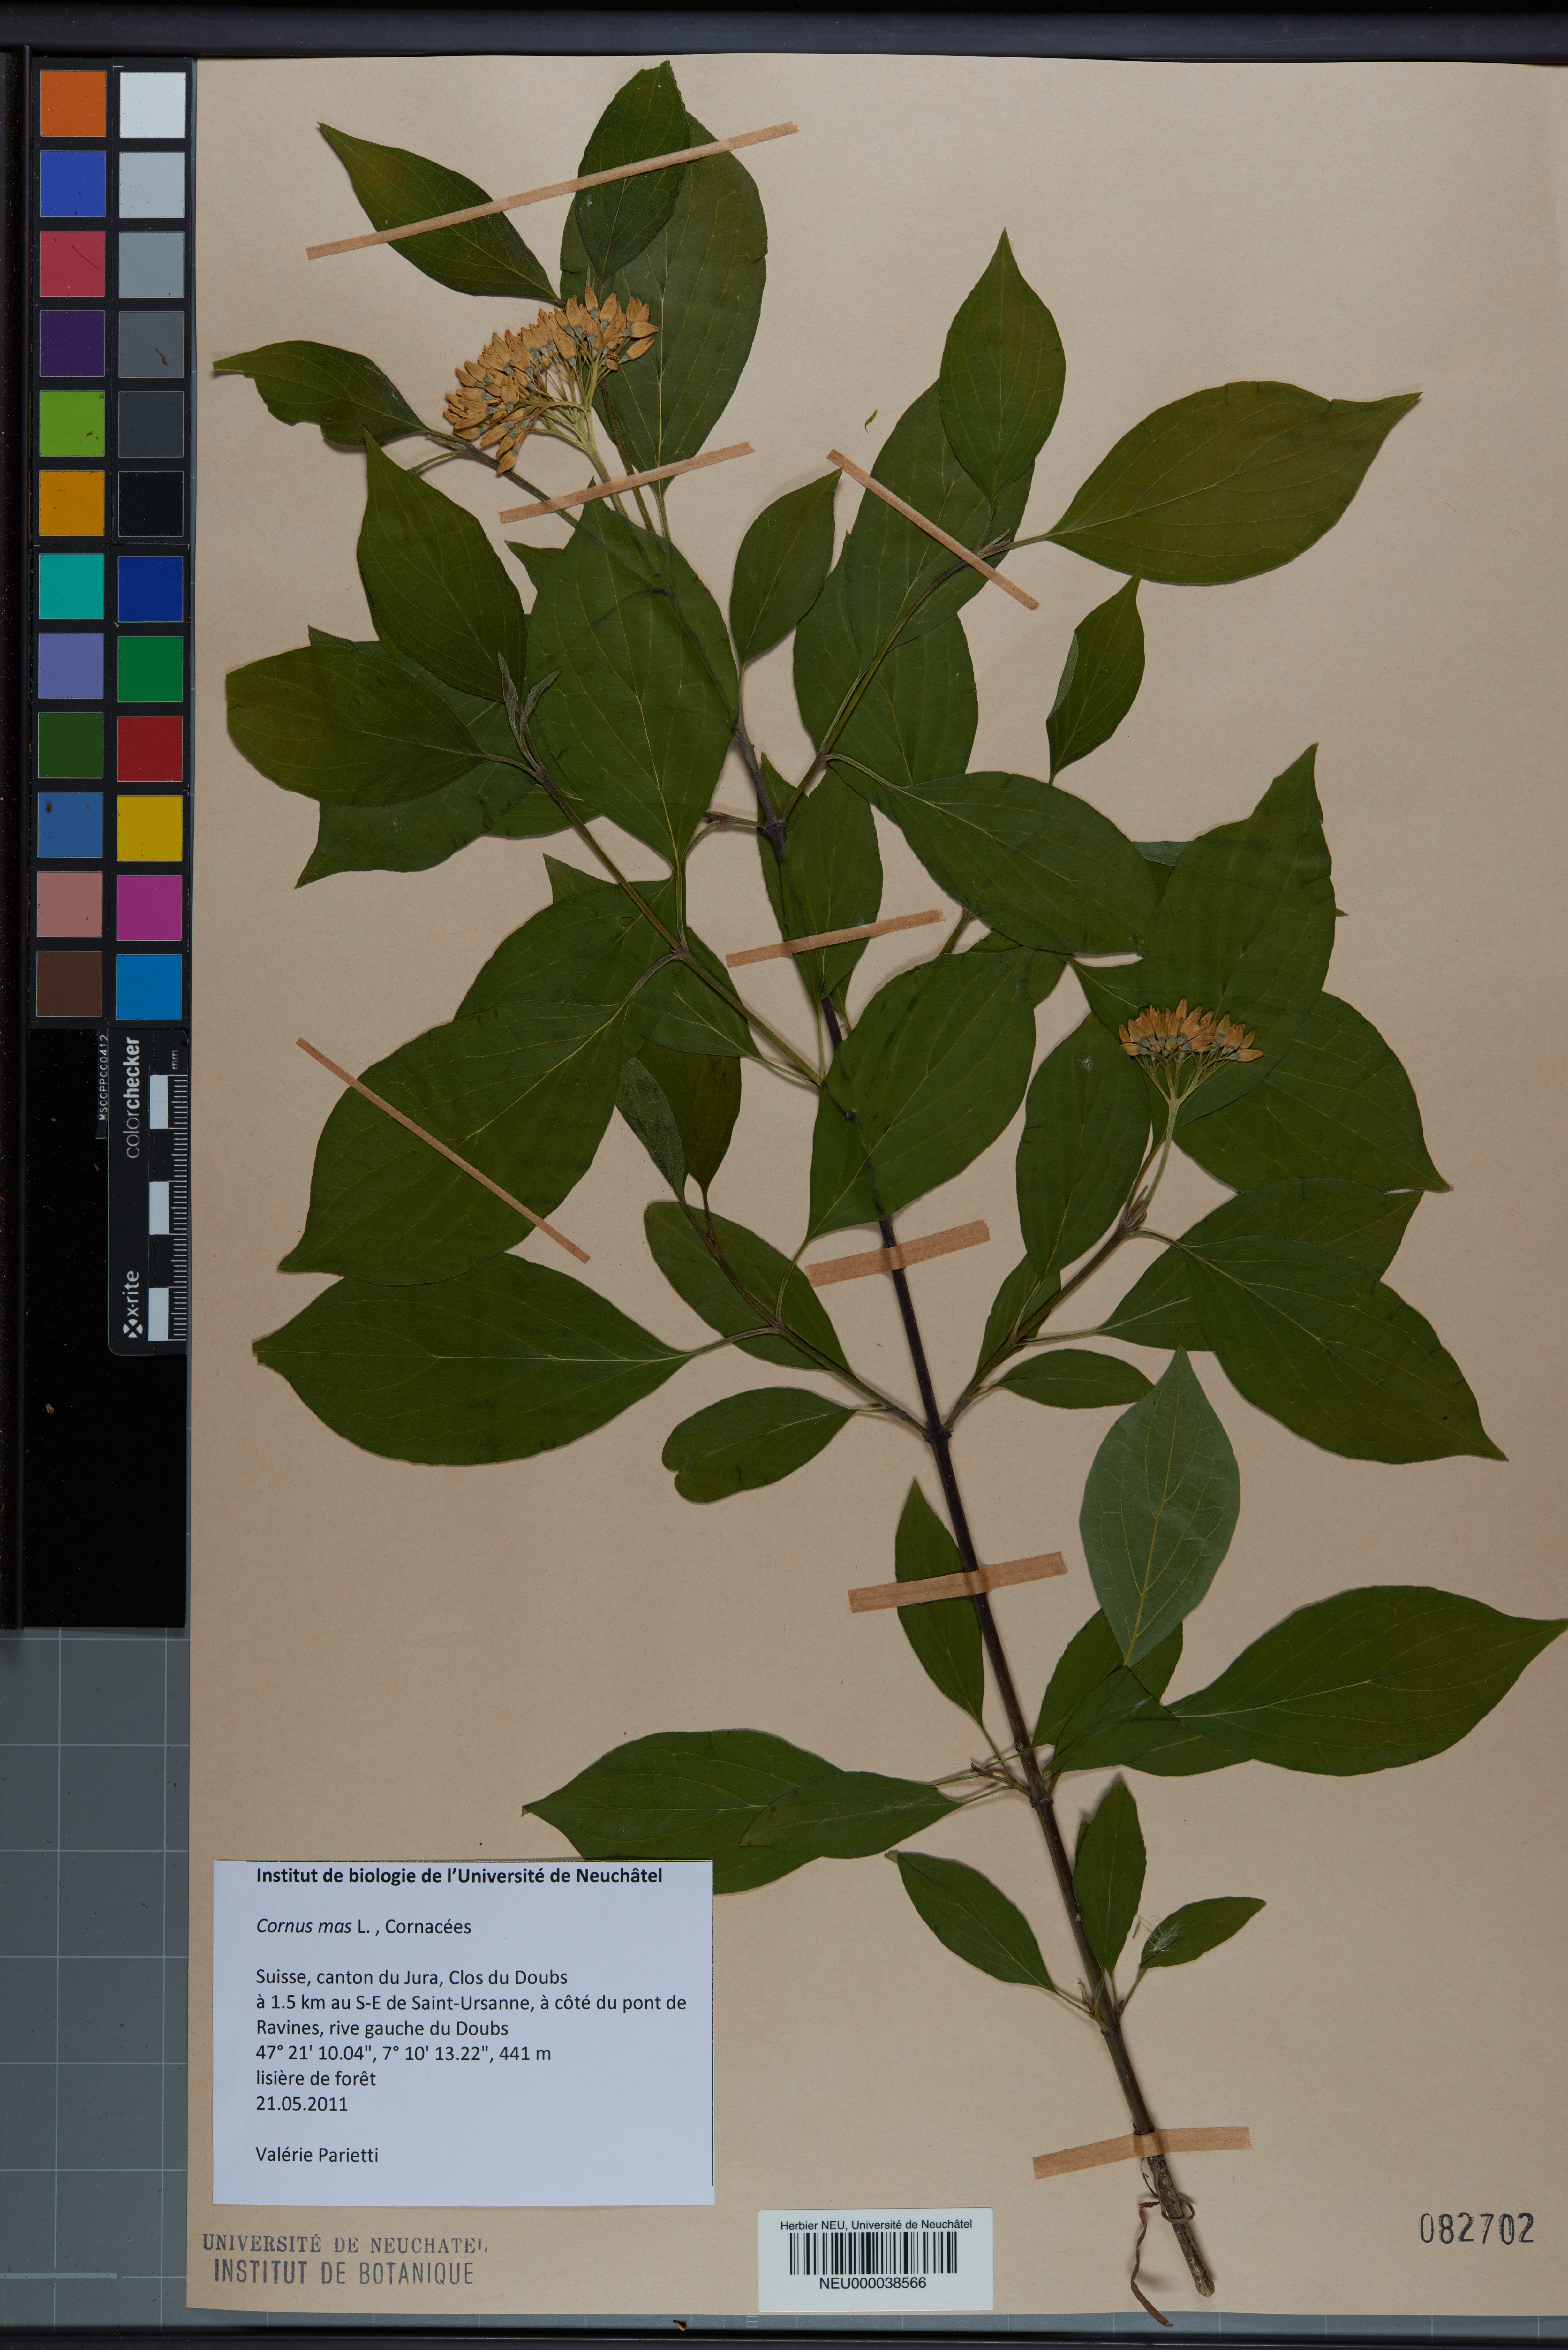 What is herbarium file